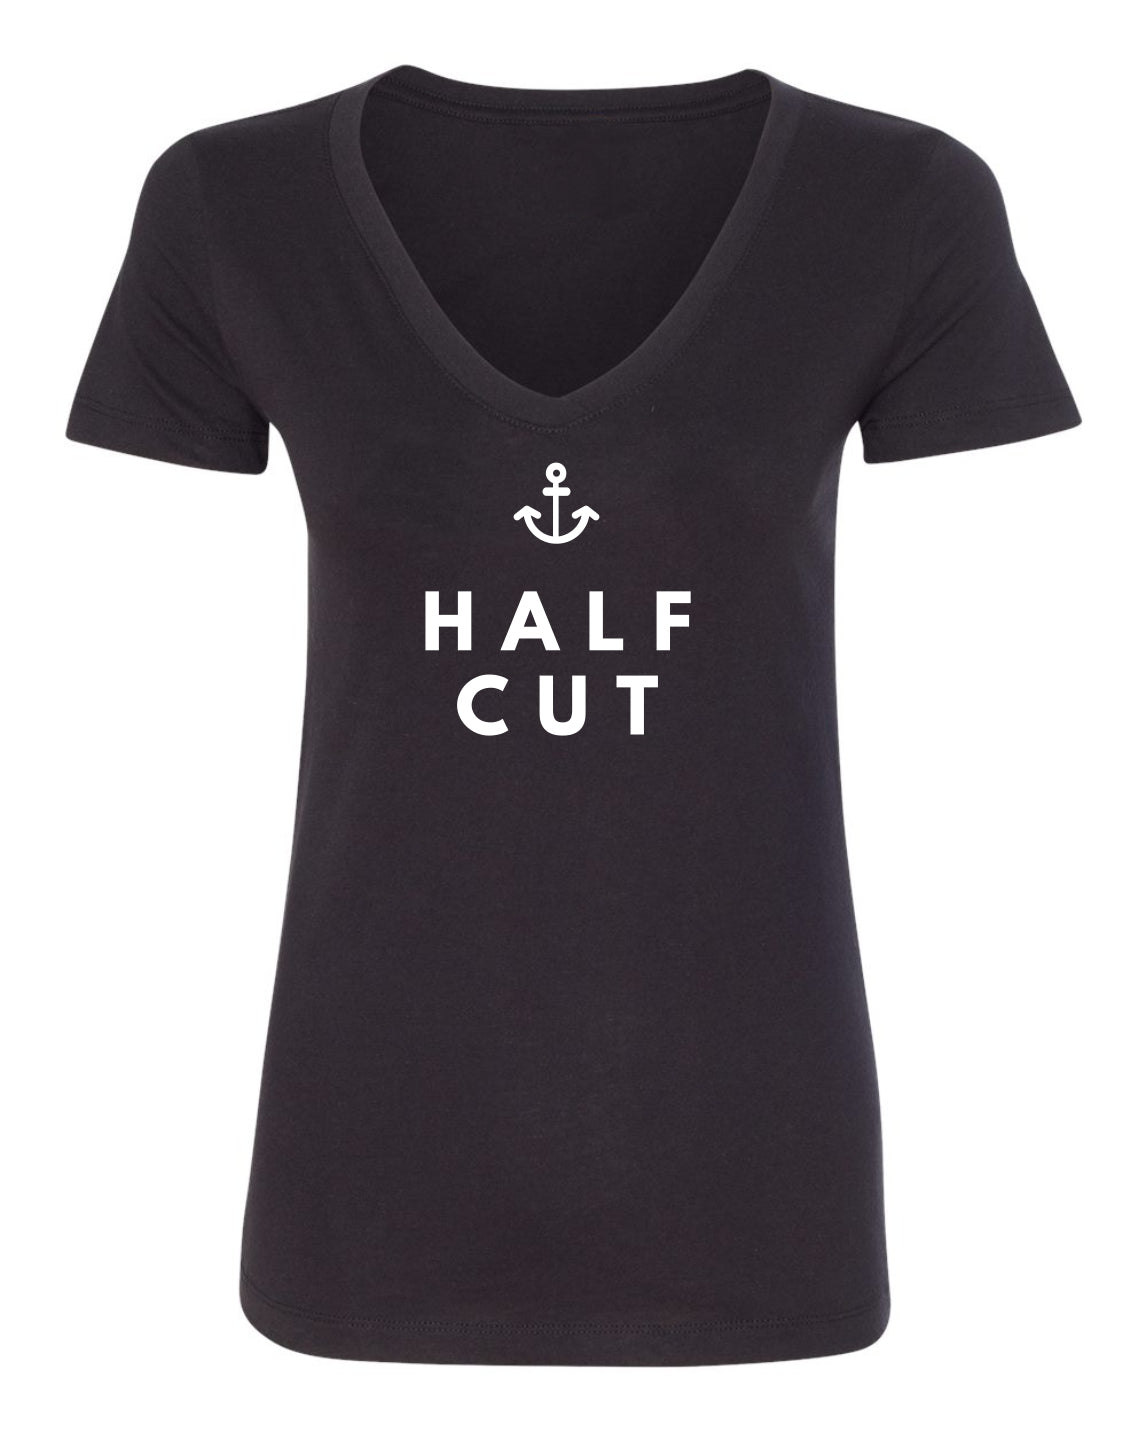 "Half Cut" T-Shirt